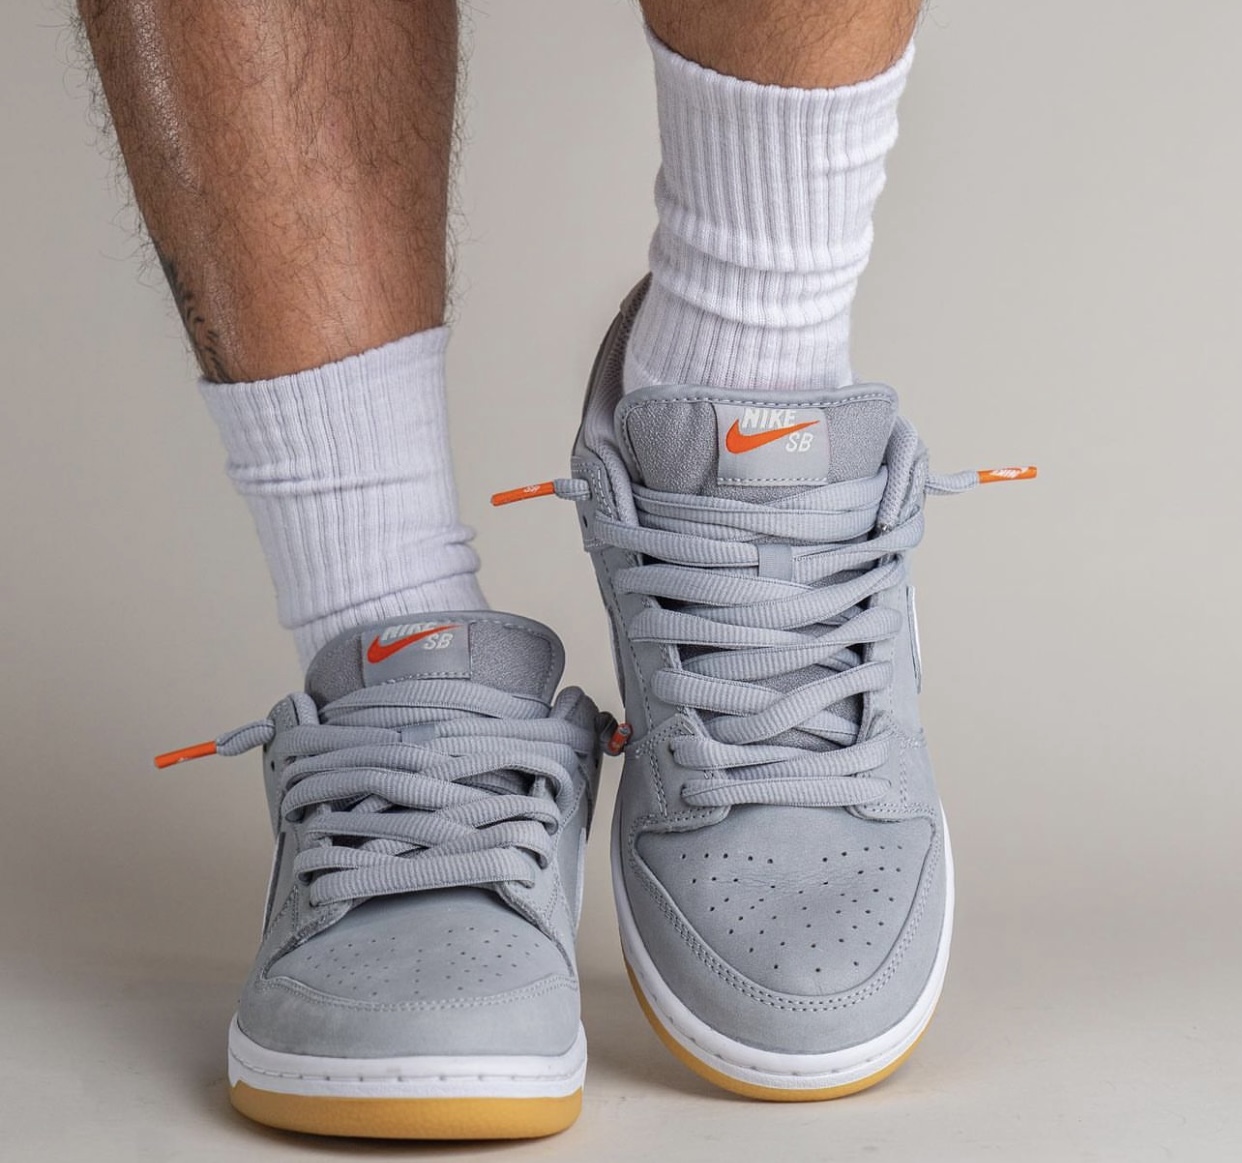 Nike SB Dunk Low Wolf Grey Gum DV5464 001 Release Date On Feet 5